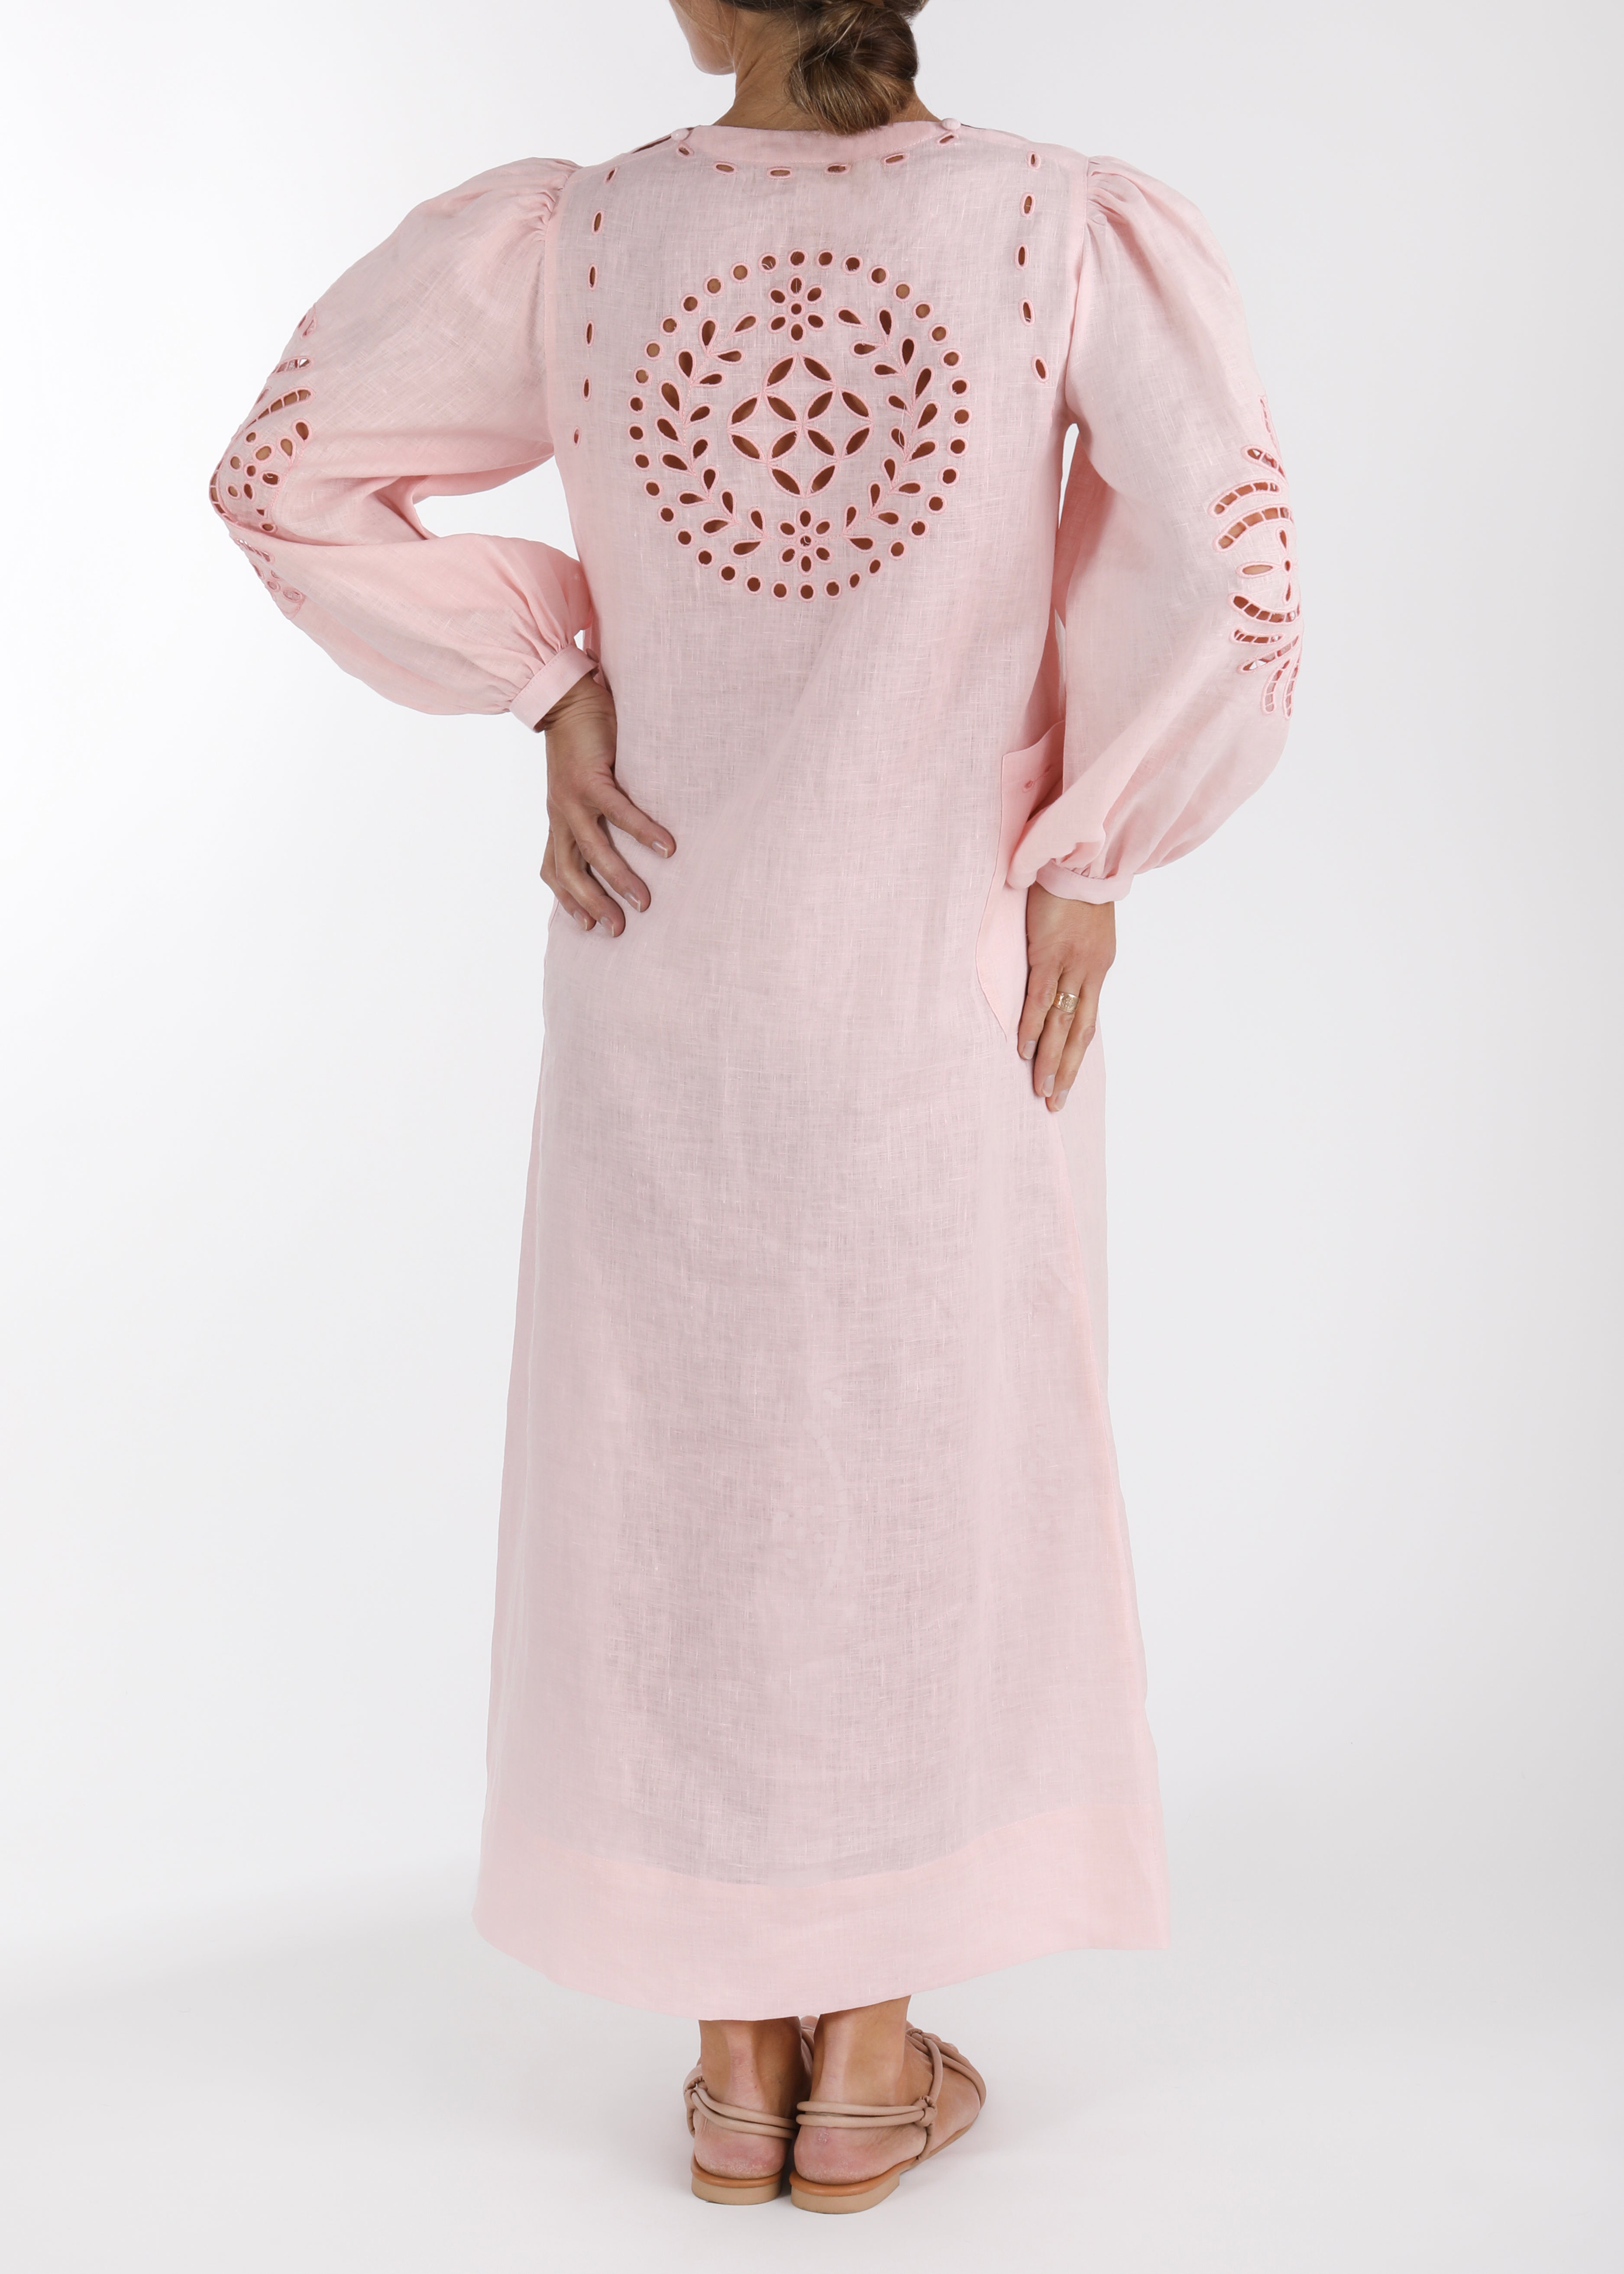 Richelieu Ukrainian Dress - Blush Pink by Larkin Lane